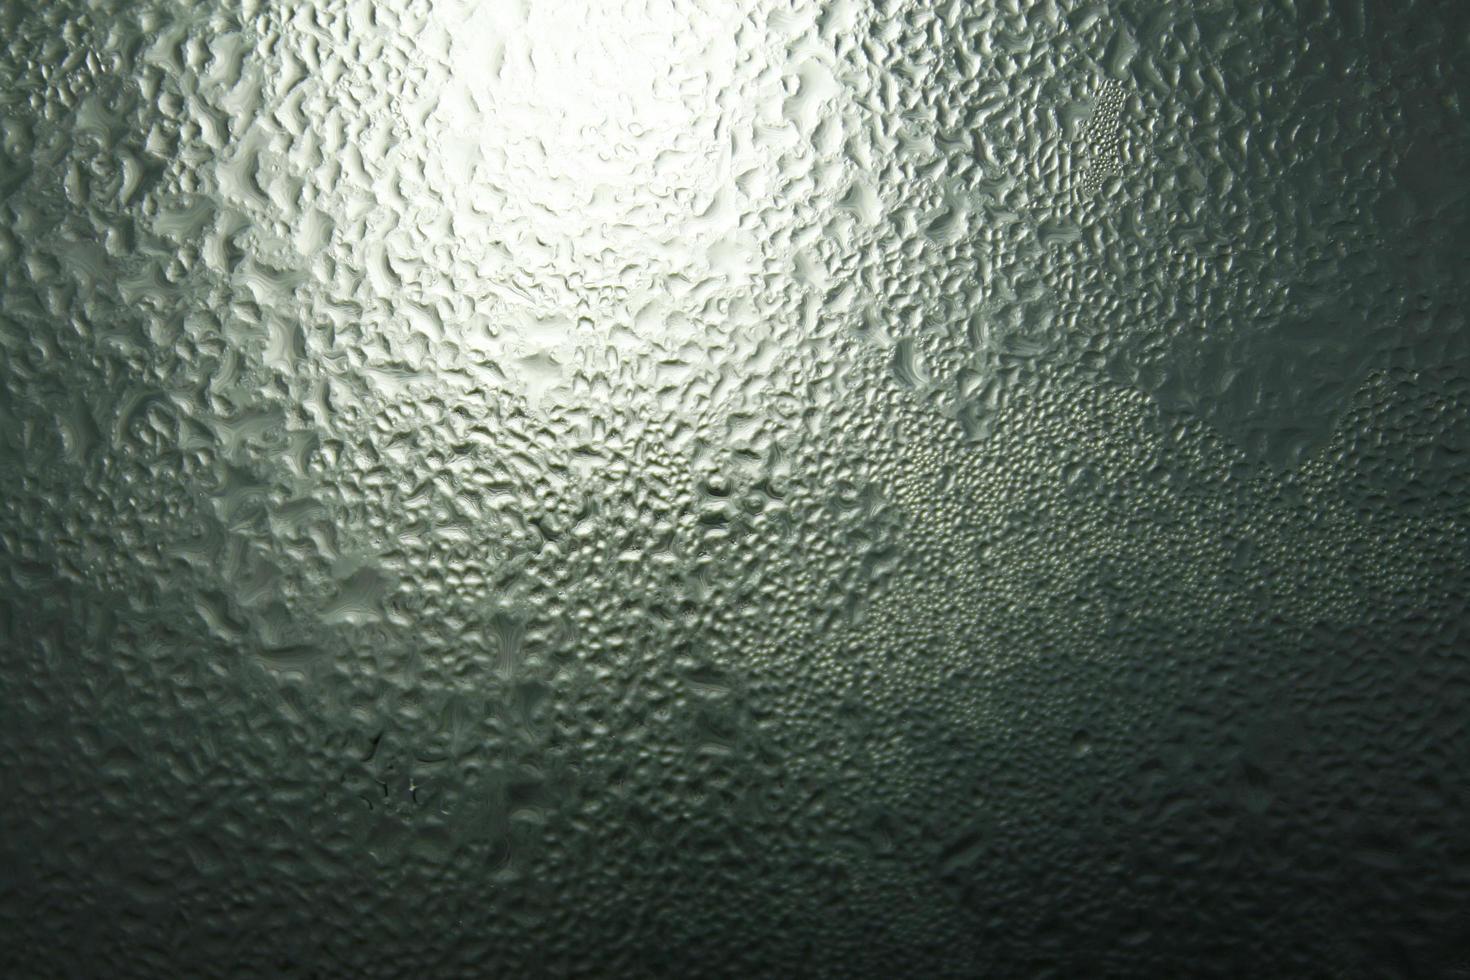 Raindrops on a window in the dark photo